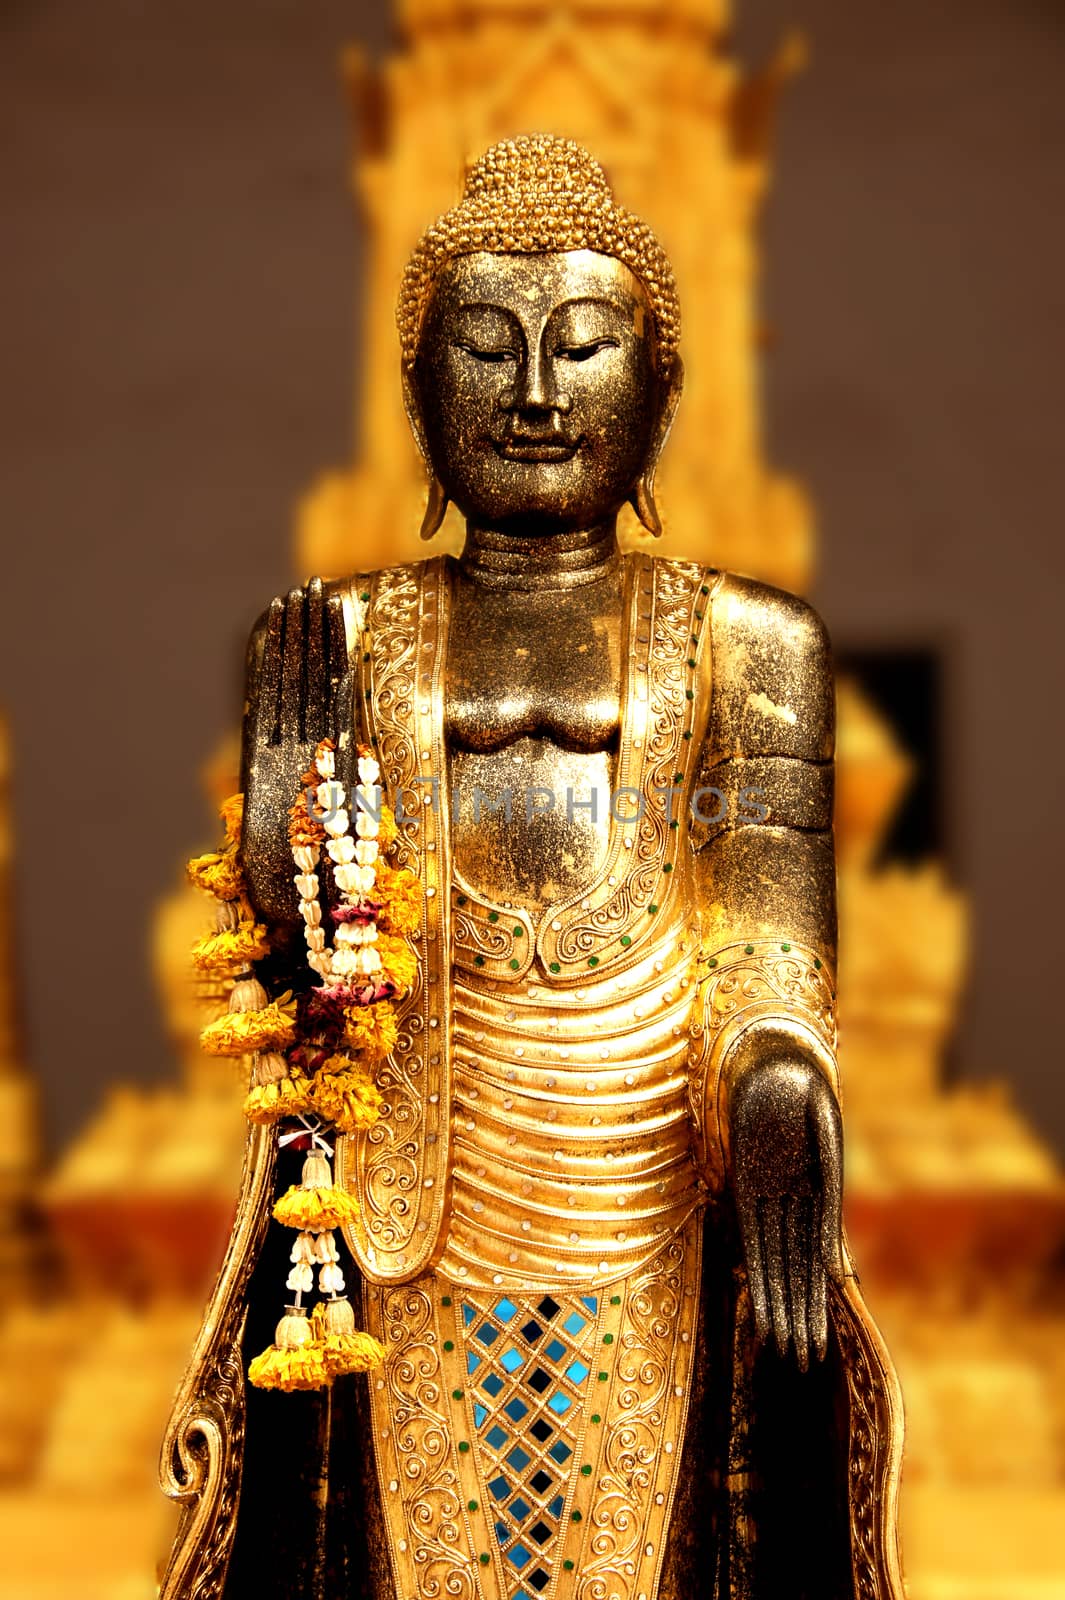 Golden Buddha in Thai temple by Noppharat_th